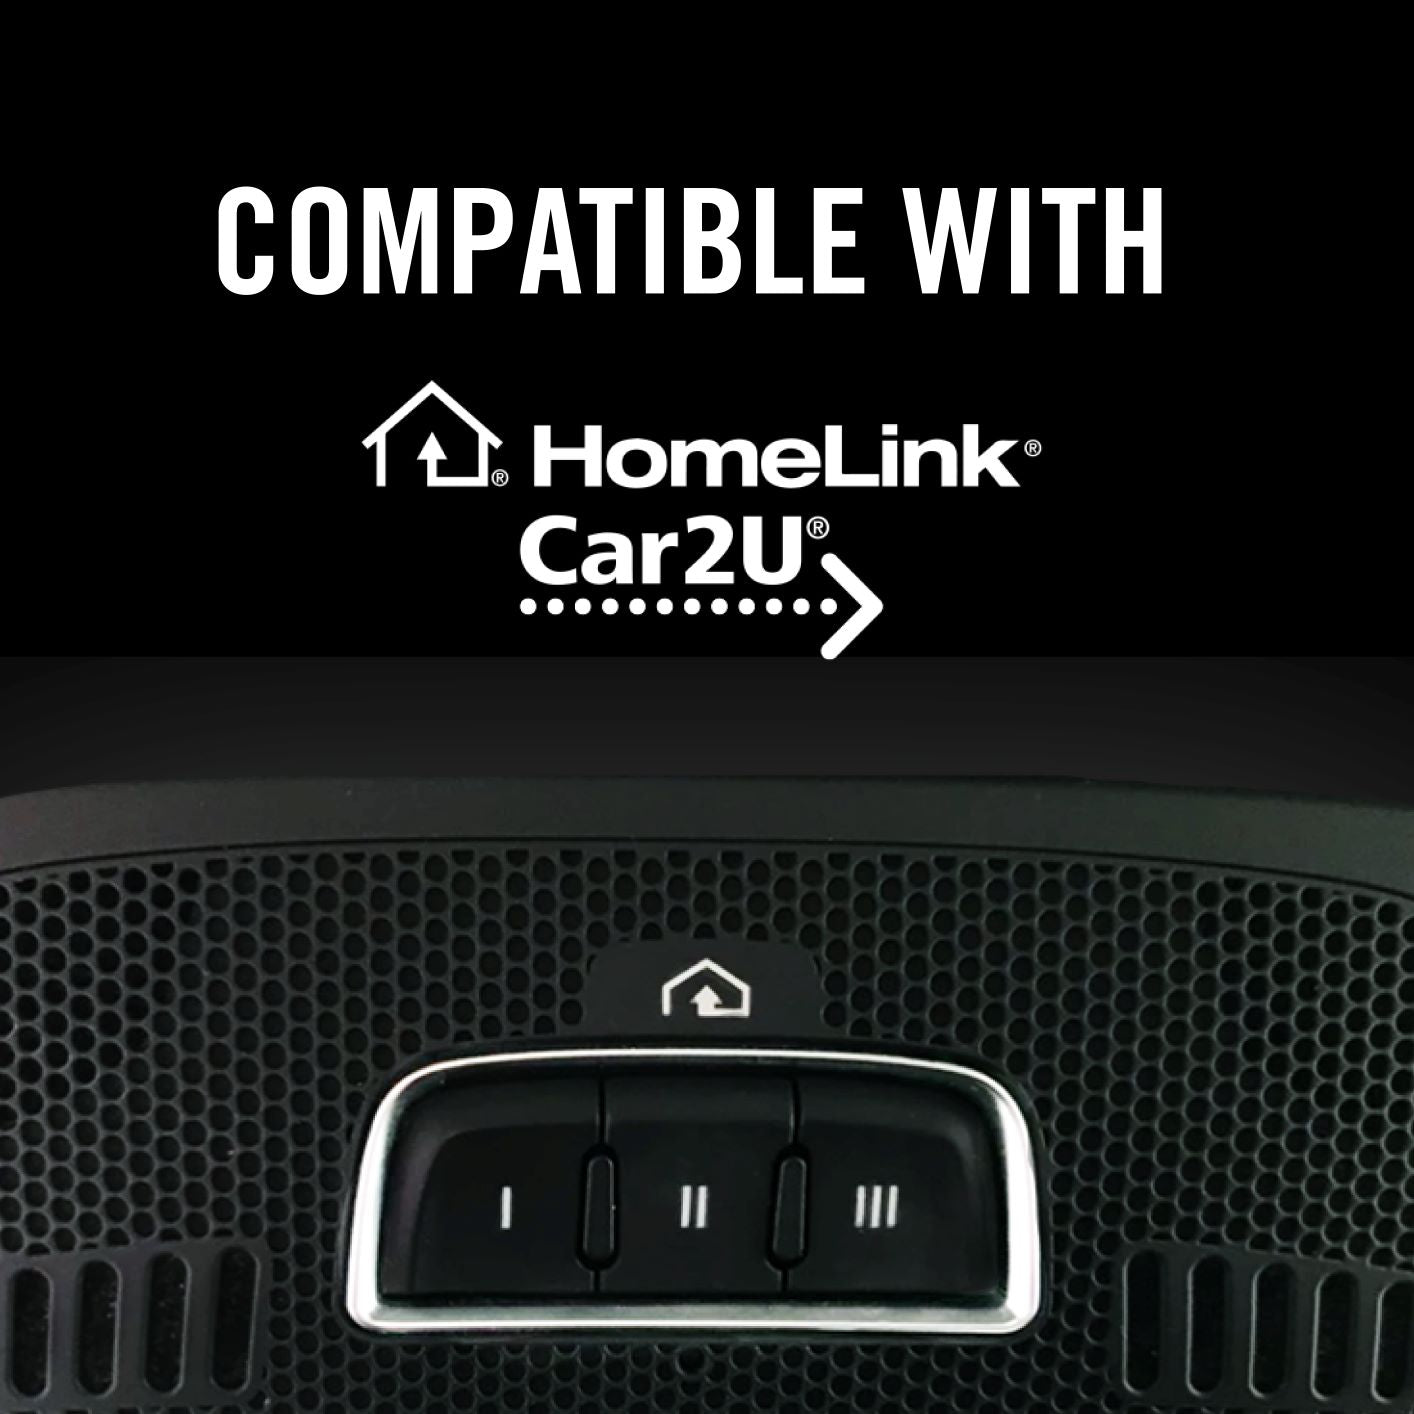 Genie garage door openers are compatible with Homelink and Car2U